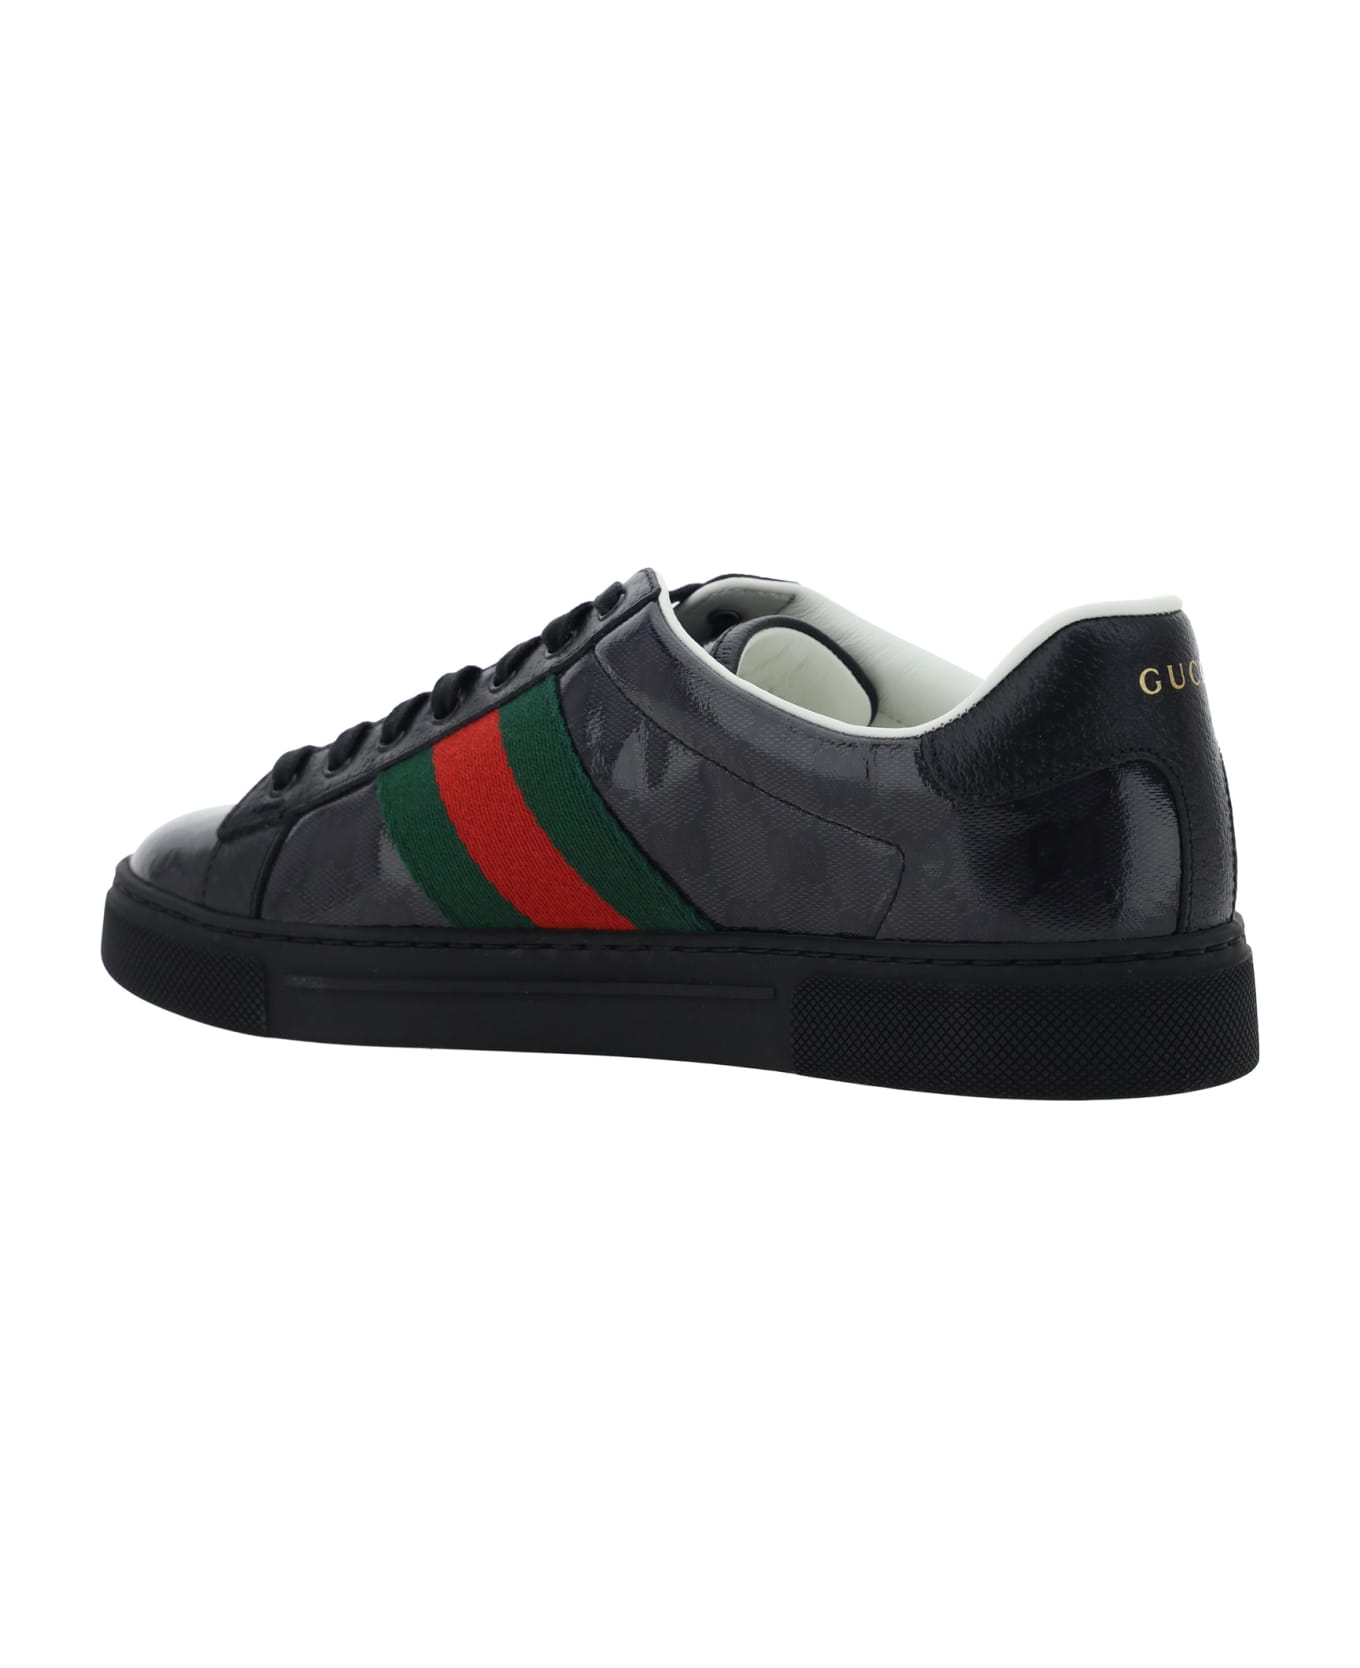 Gucci Ace Sneakers - Black/black